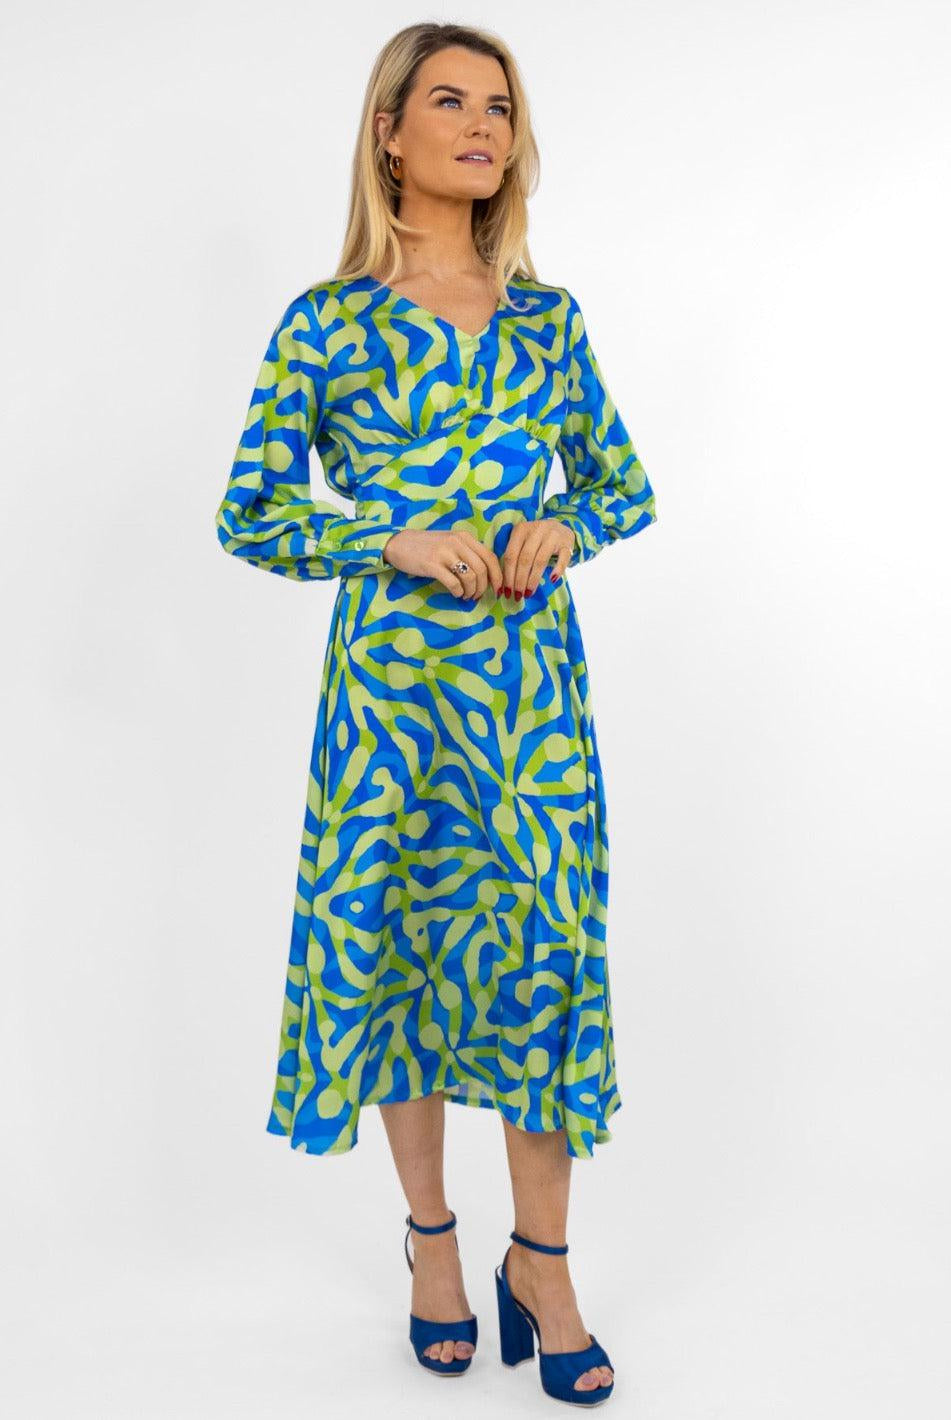 Dresses - Kate & Pippa Fashion Wholesale